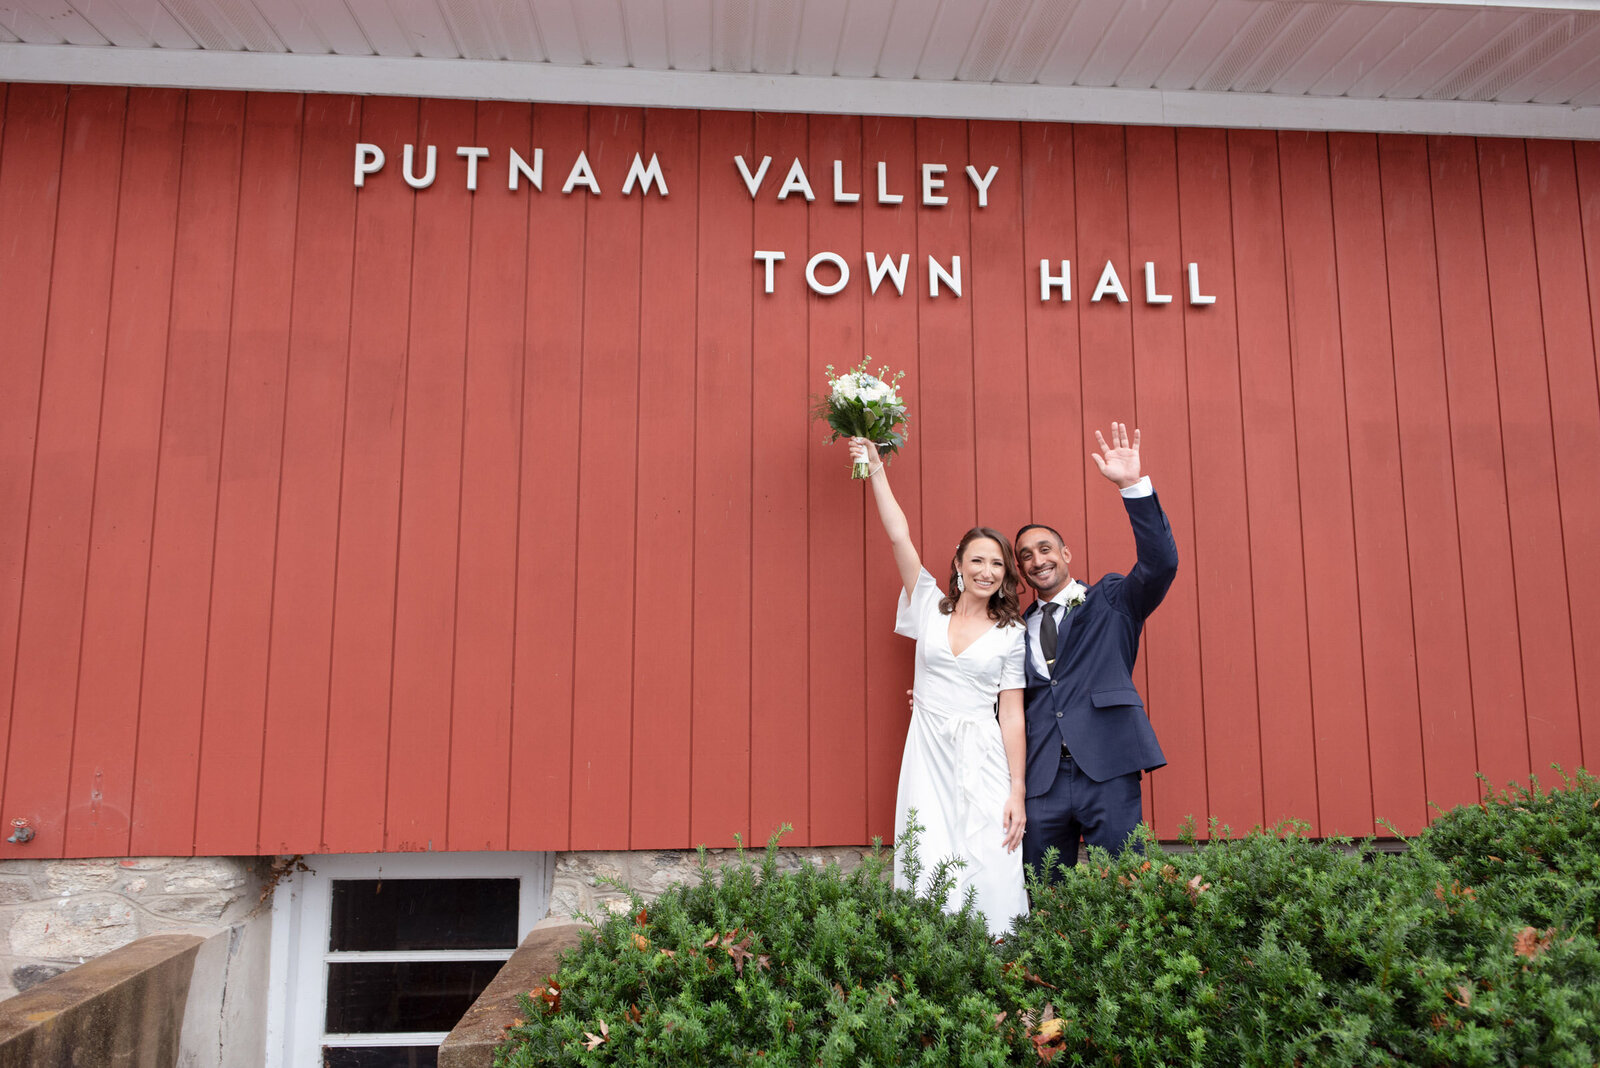 15-putnam-dutchess-town-city-hall-courthouse-wedding-photographer